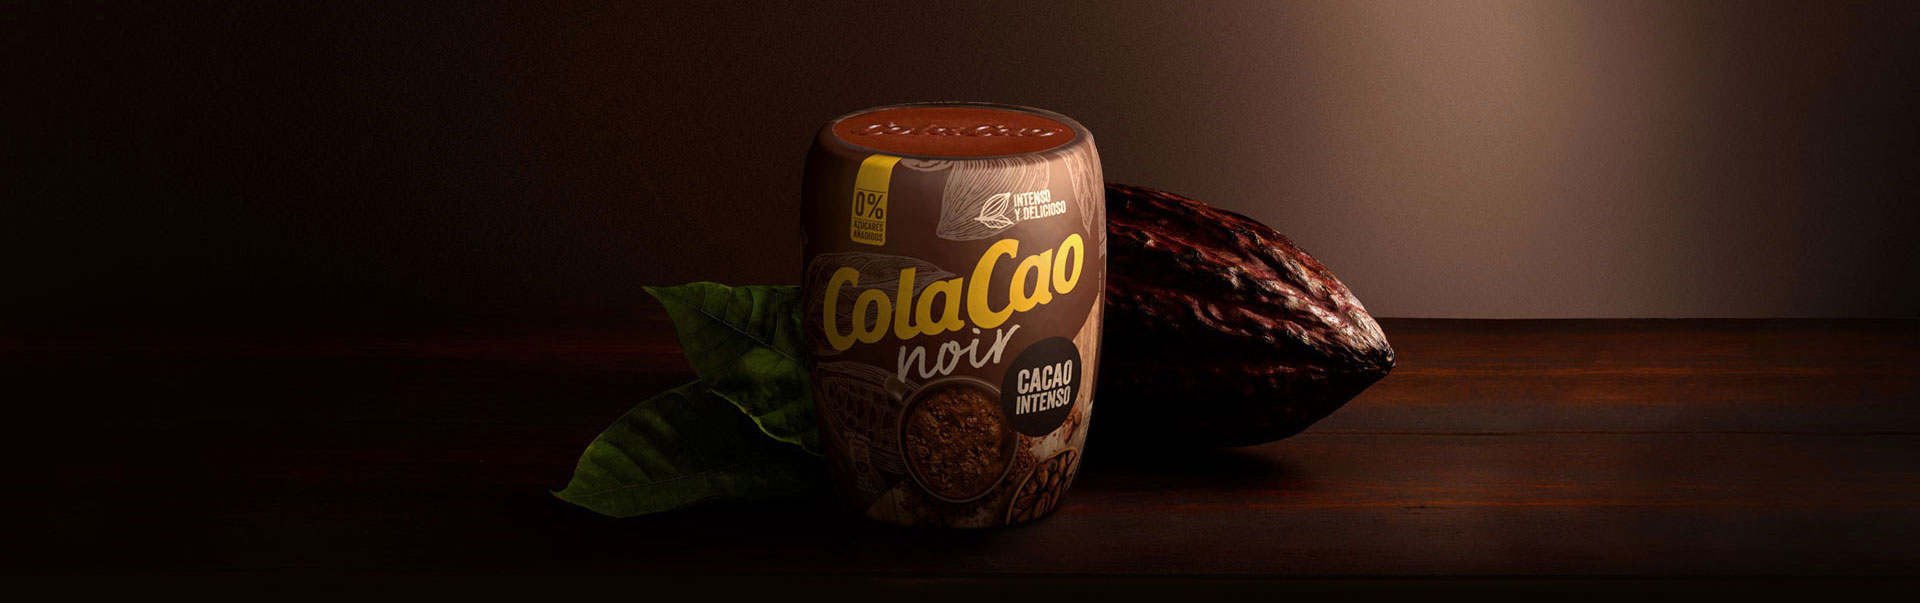 ColaCao Noir